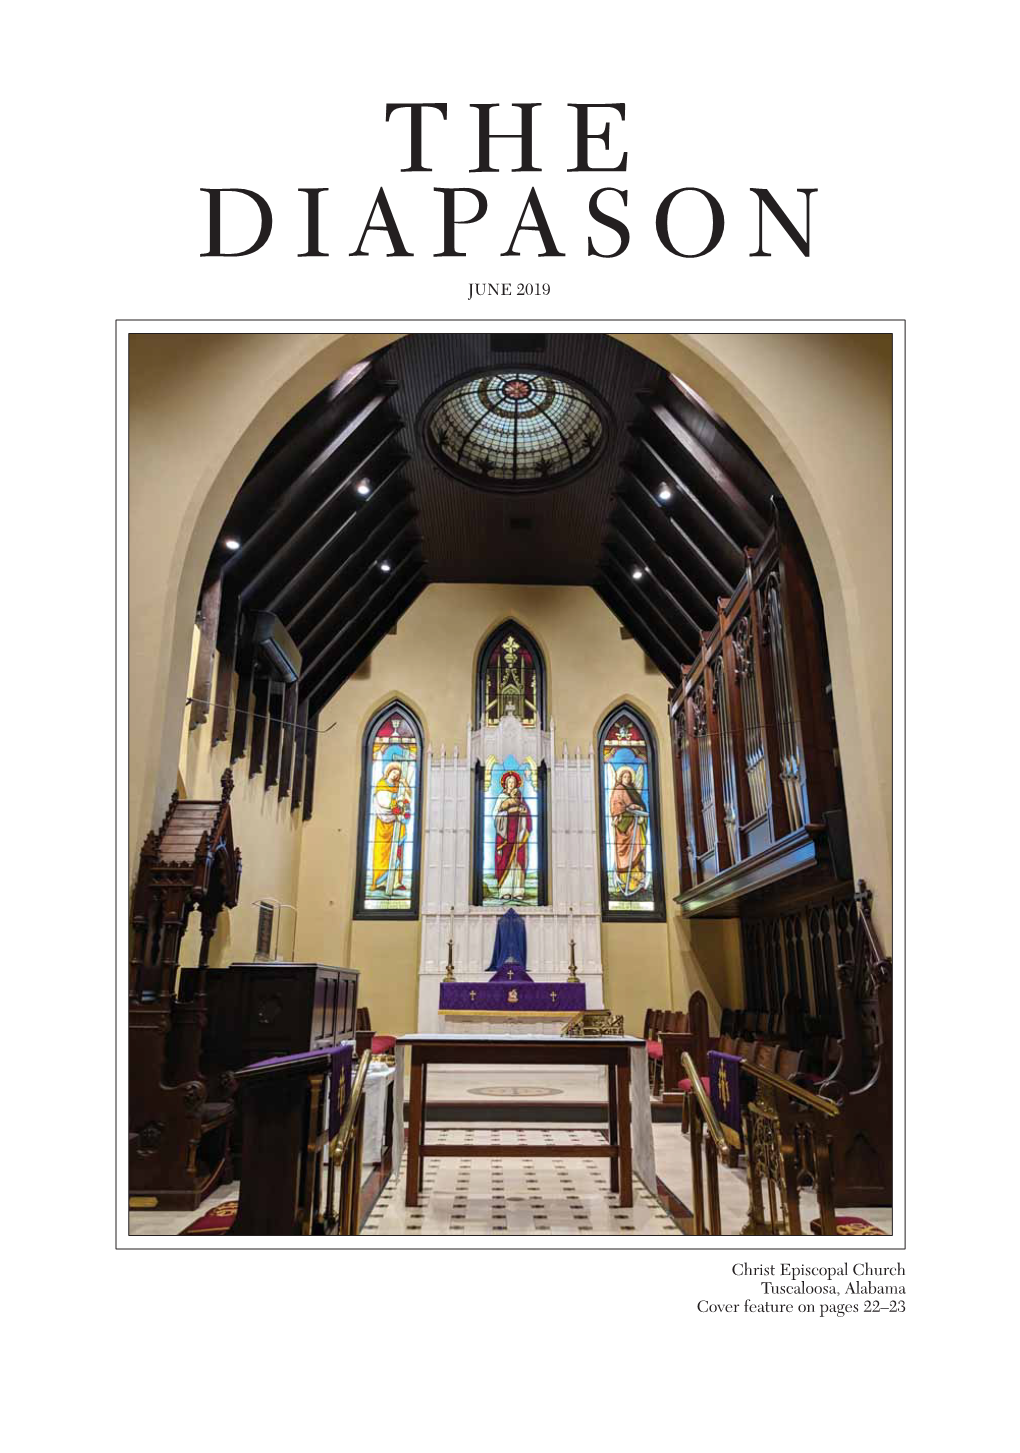 JUNE 2019 Christ Episcopal Church Tuscaloosa, Alabama Cover Feature